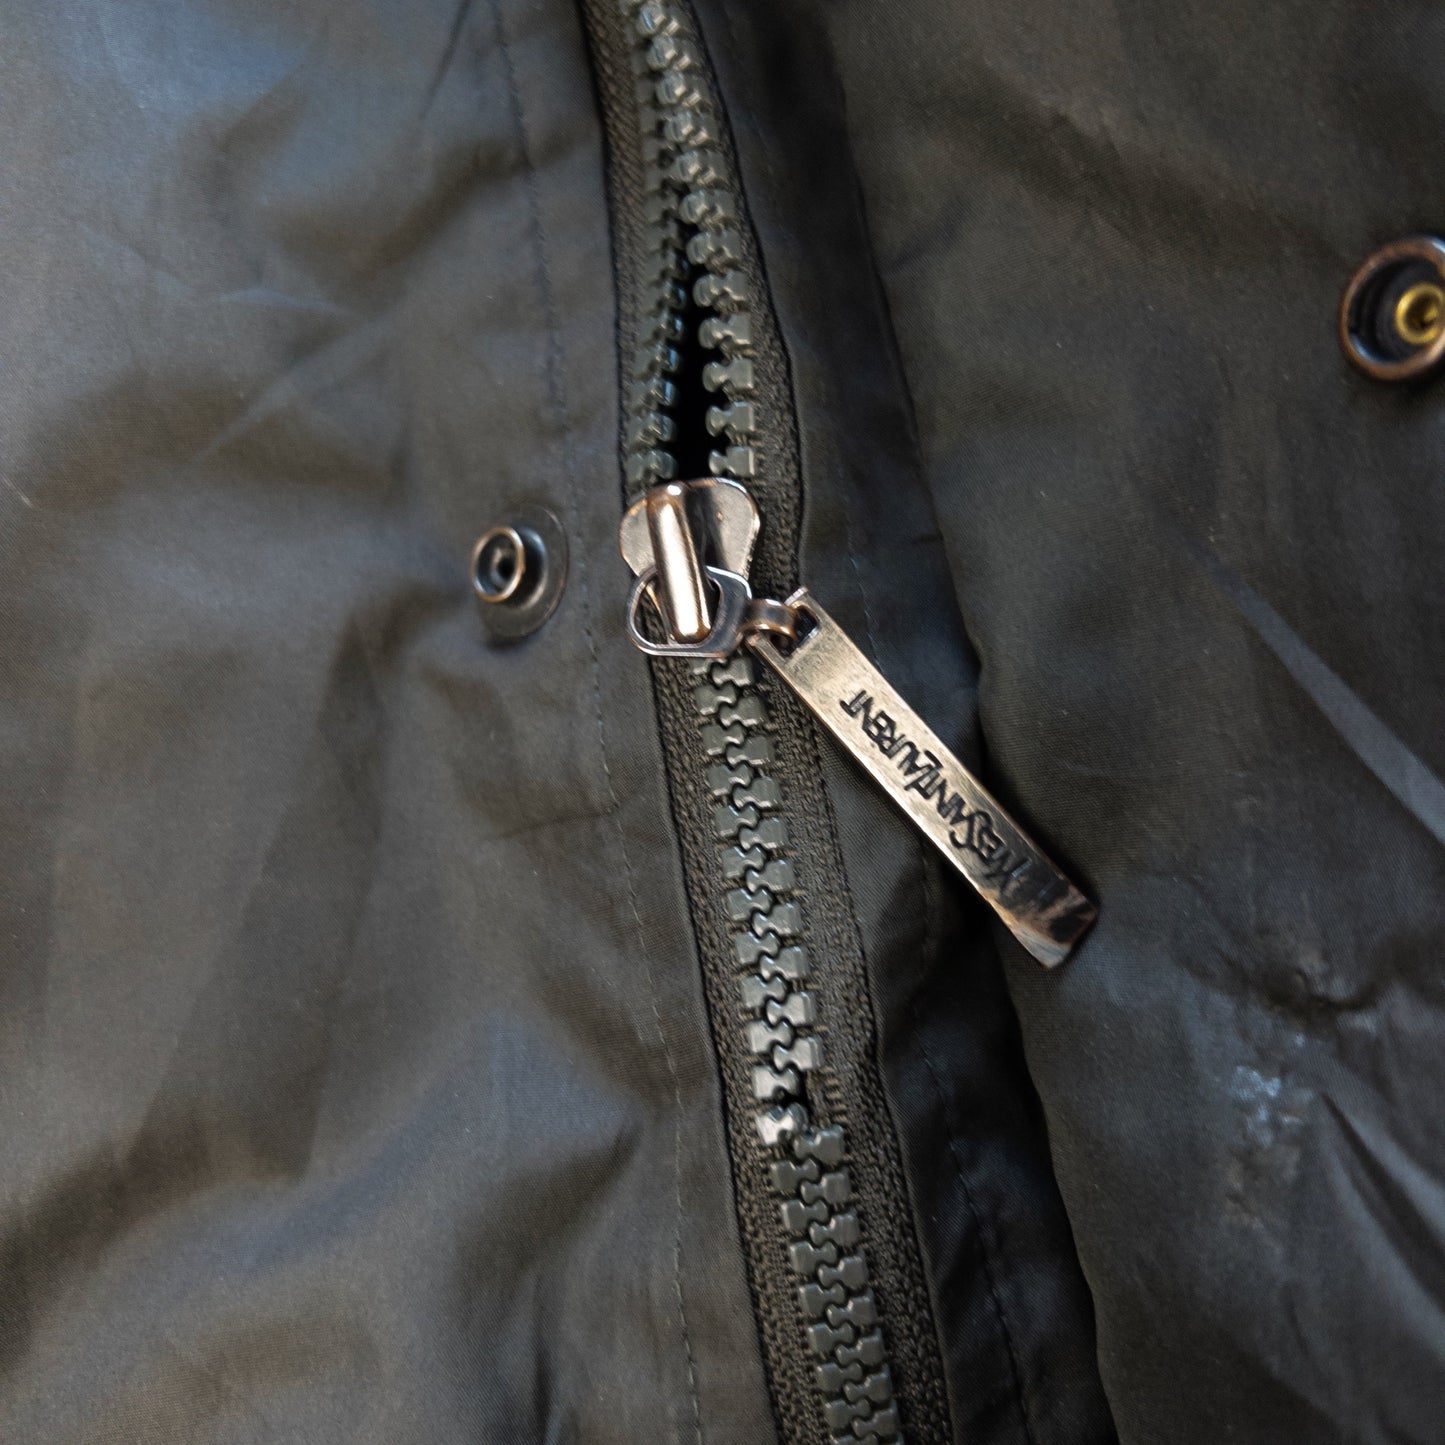 Vintage YSL Yves Saint Laurent Padded Jacket Size XL